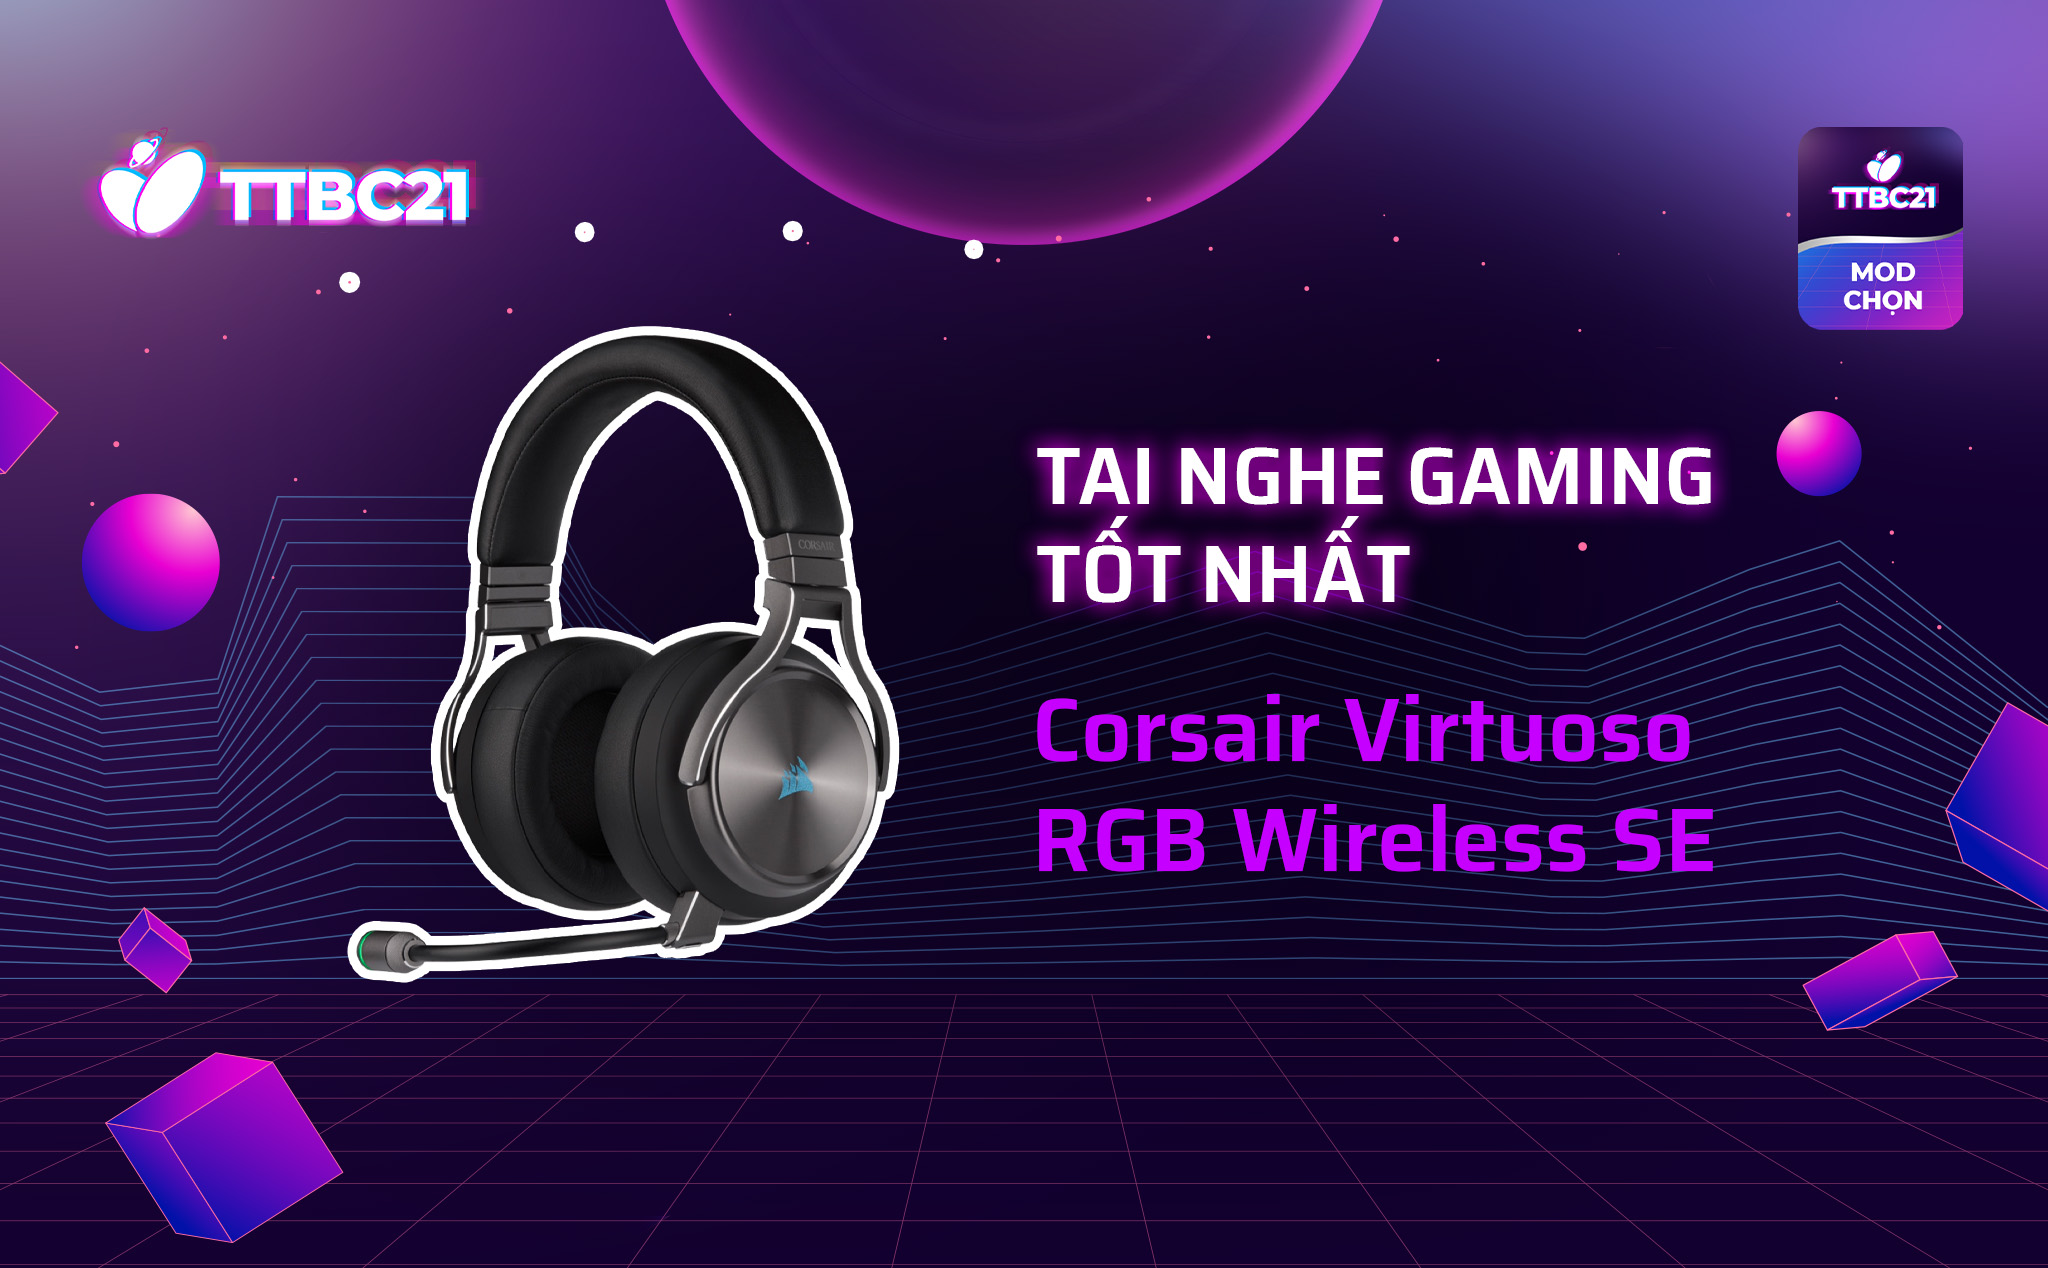 #TTBC21 – Mod Choice: Corsair Virtuoso RGB Wireless SE, tai nghe gaming tốt nhất